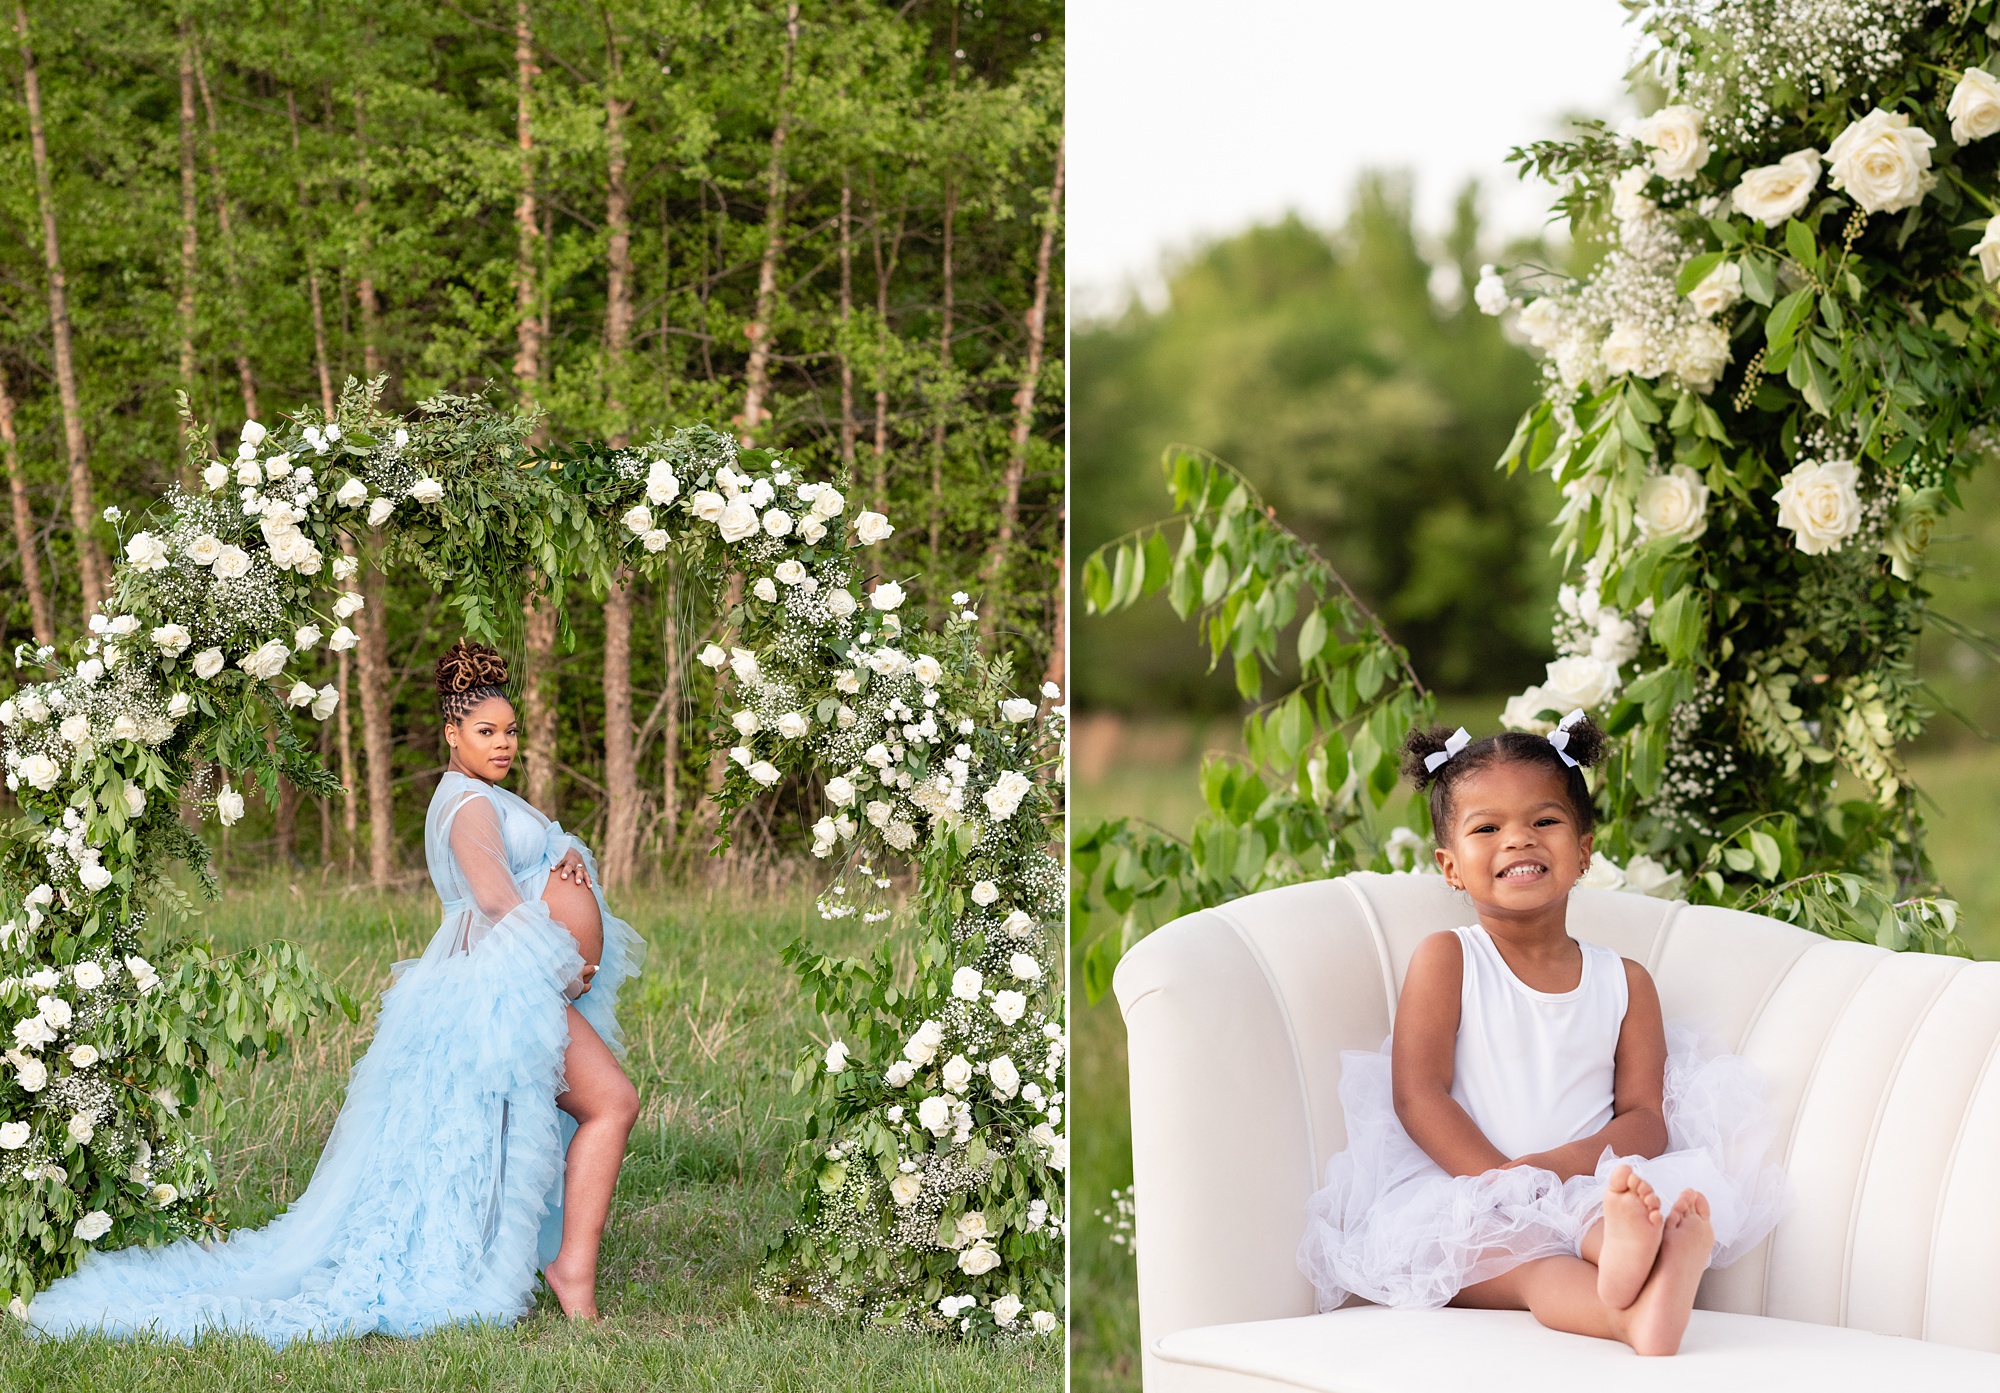 Washington DC maternity photographer designs spring maternity photos for family